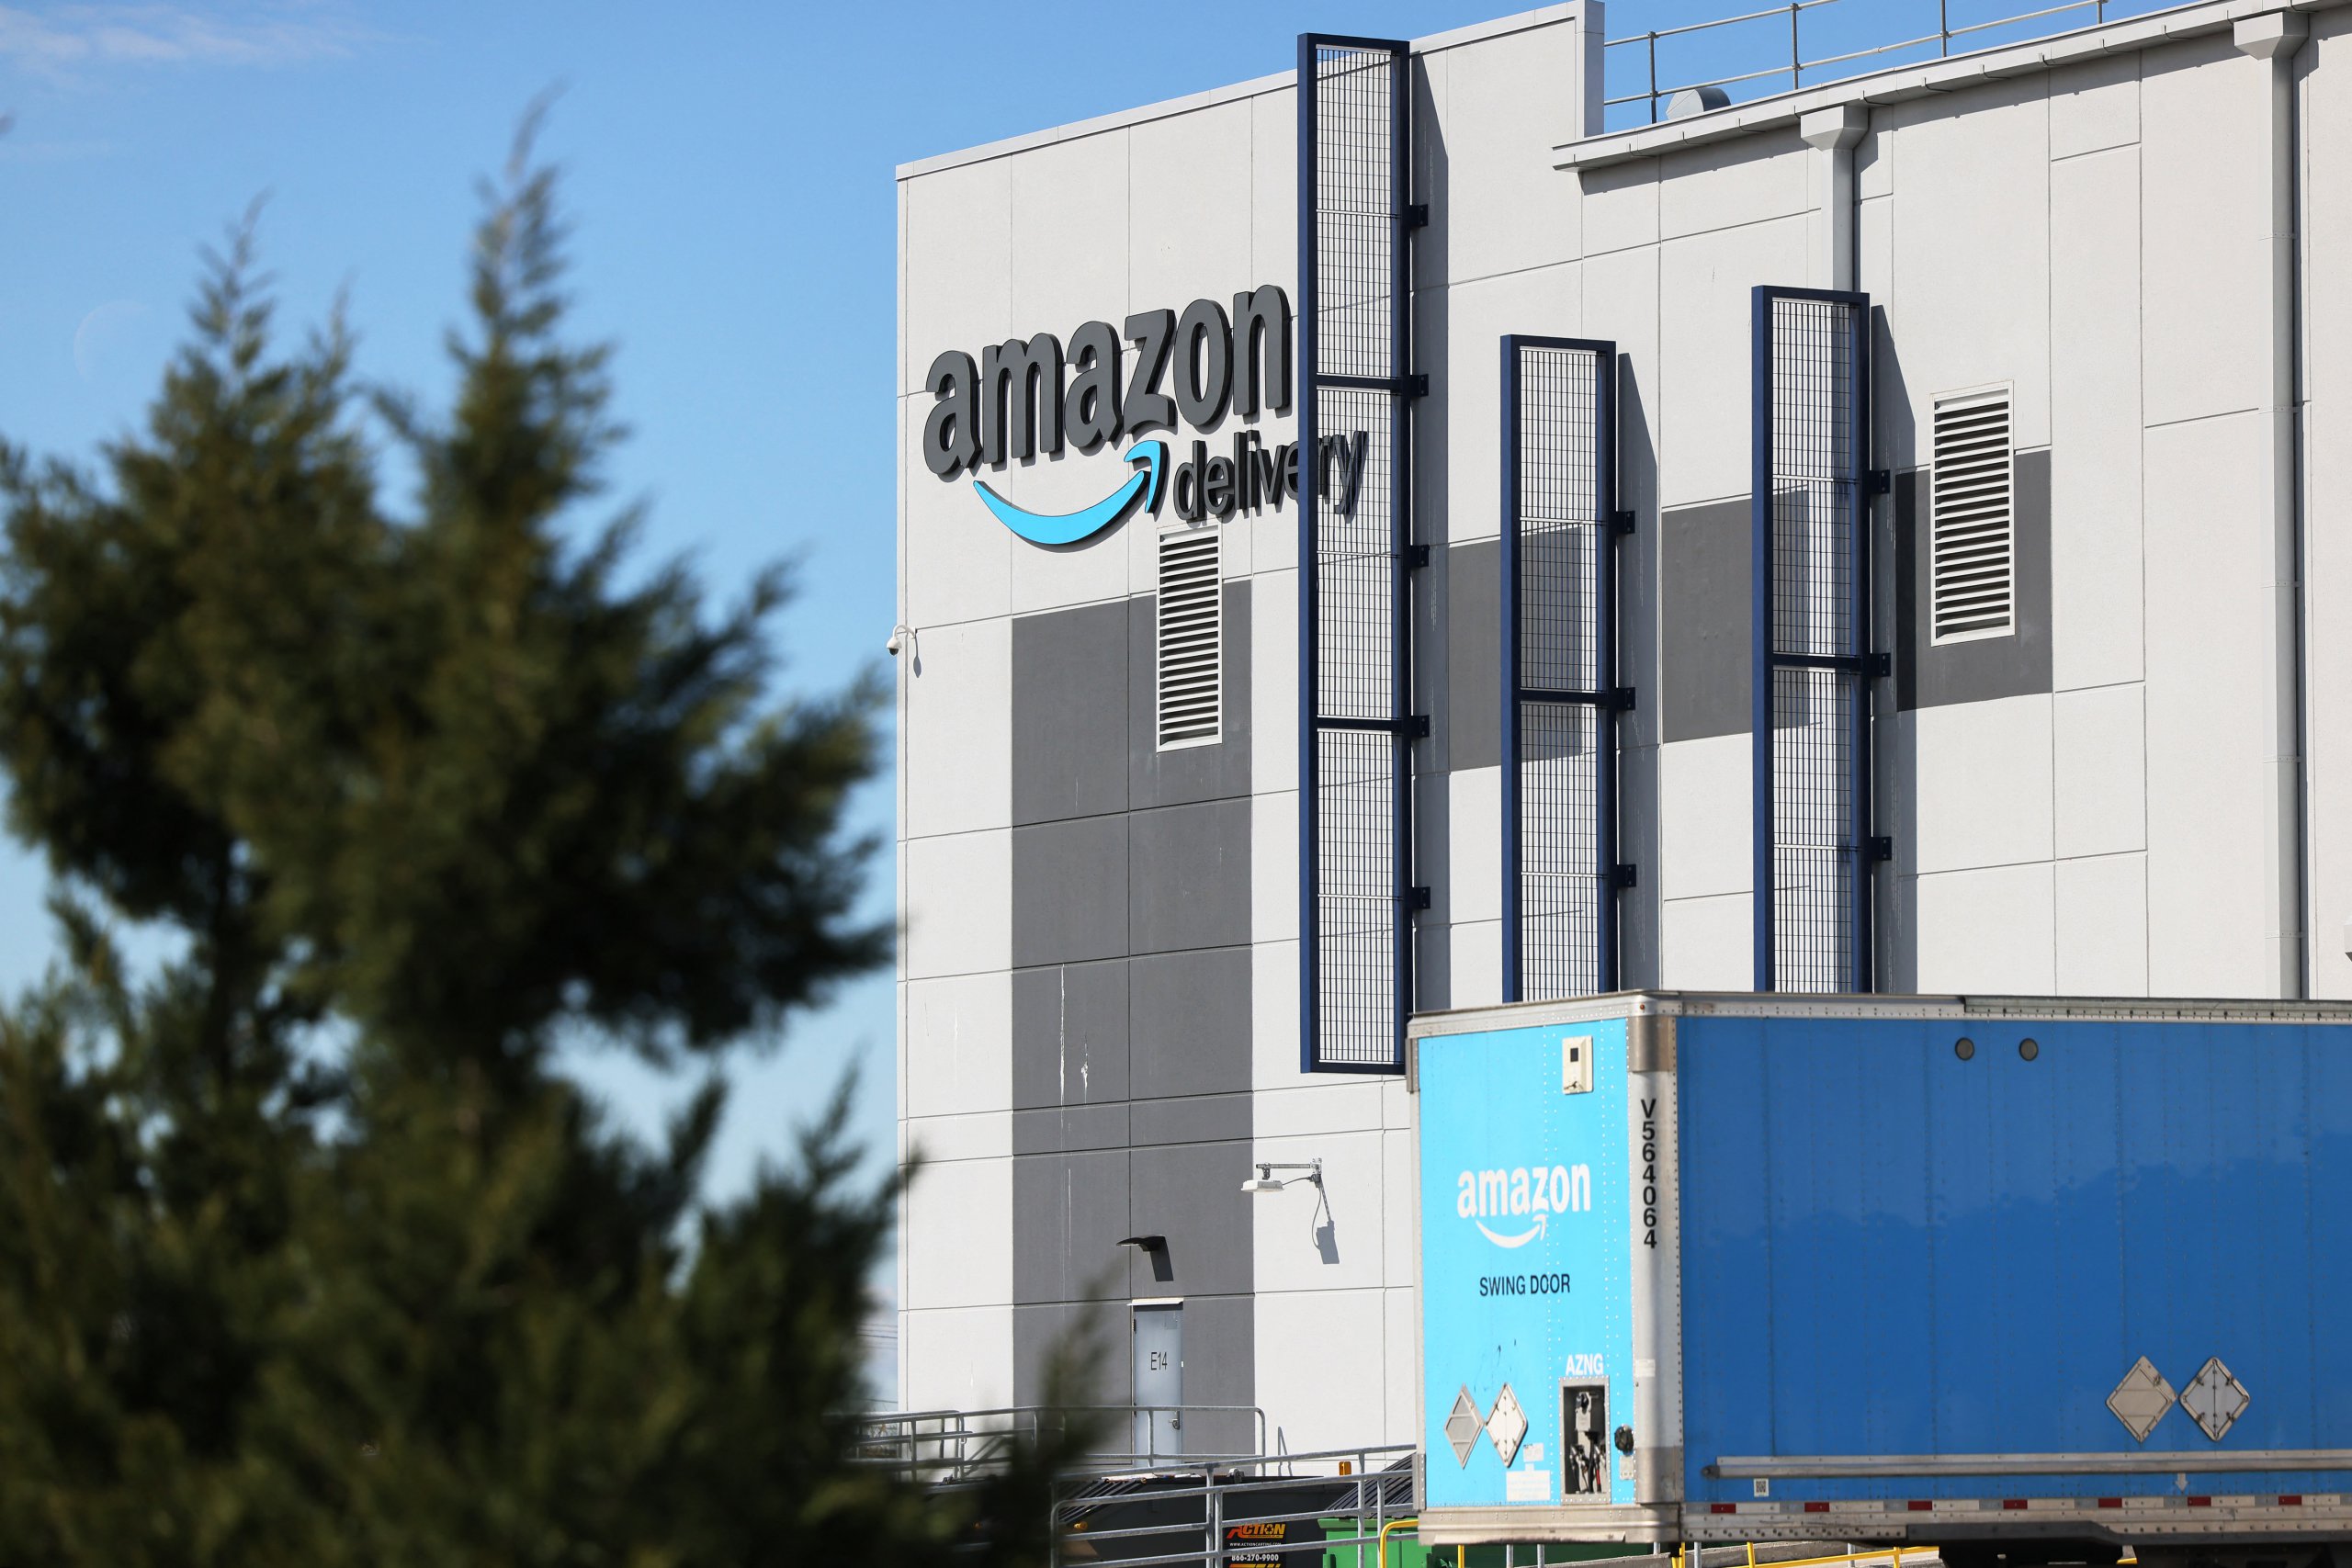 Will the new billion-dollar innovation roadmap really help Amazon improve logistics?